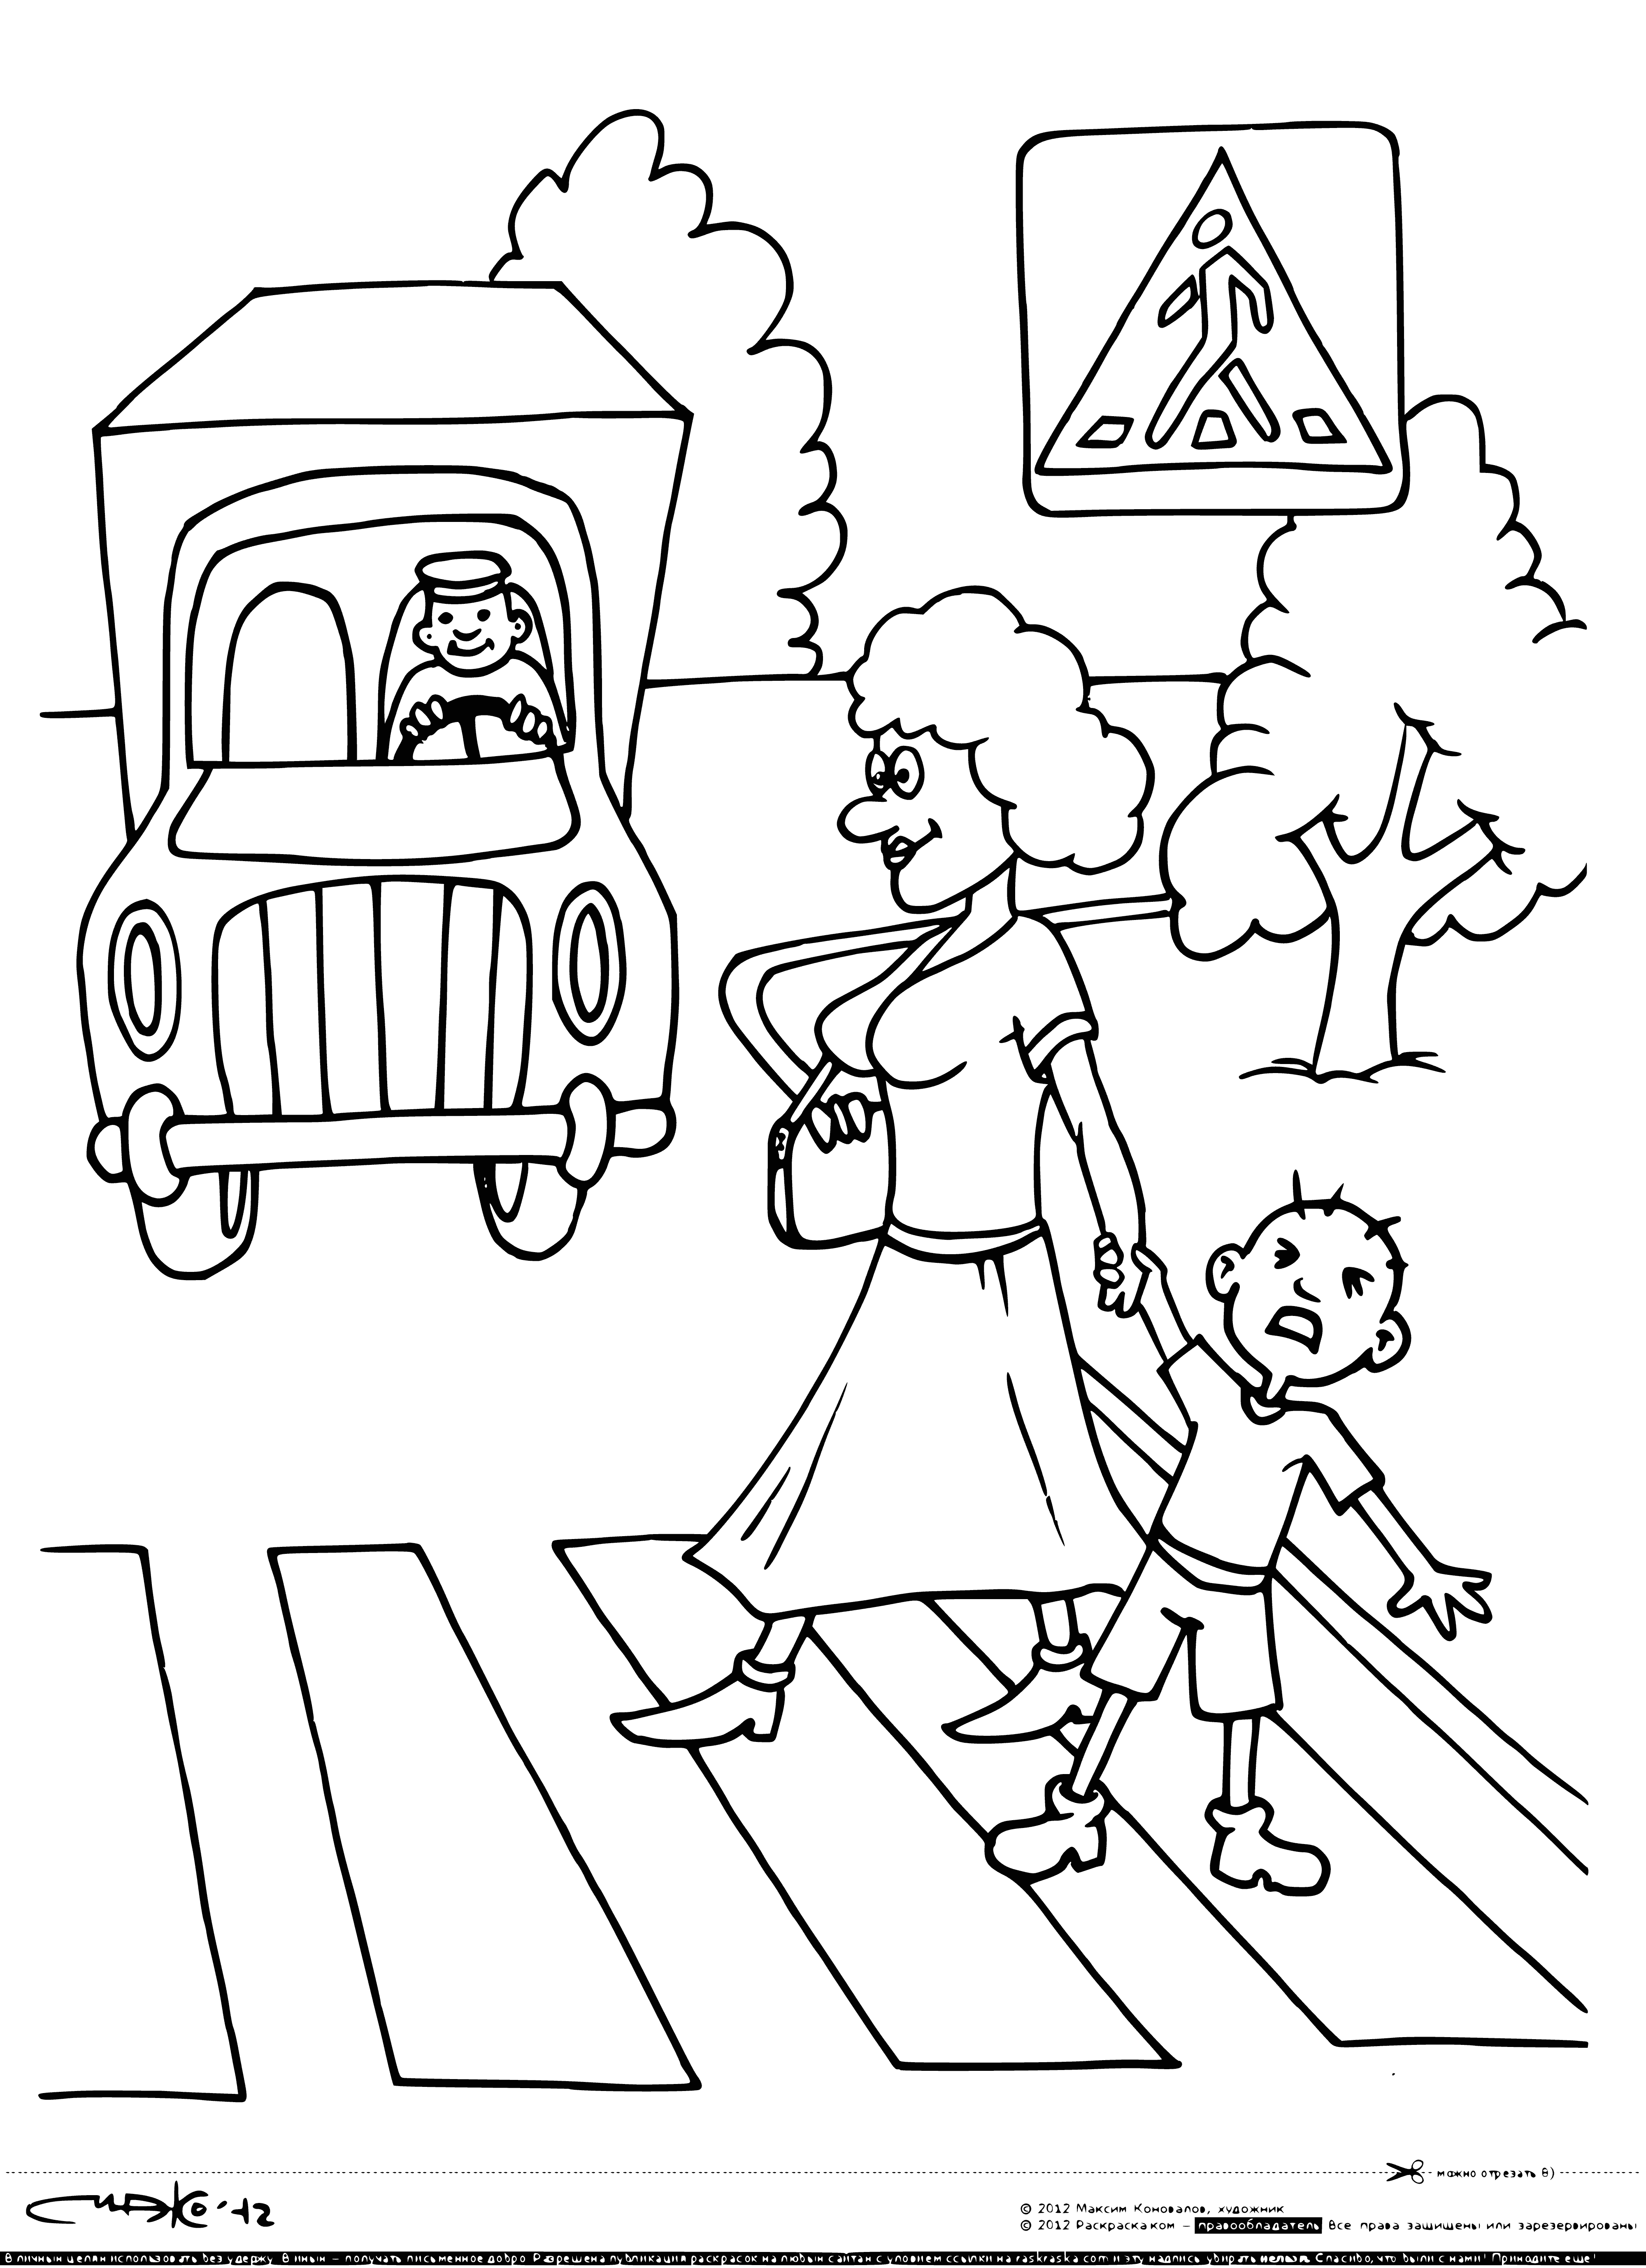 Crosswalk coloring page